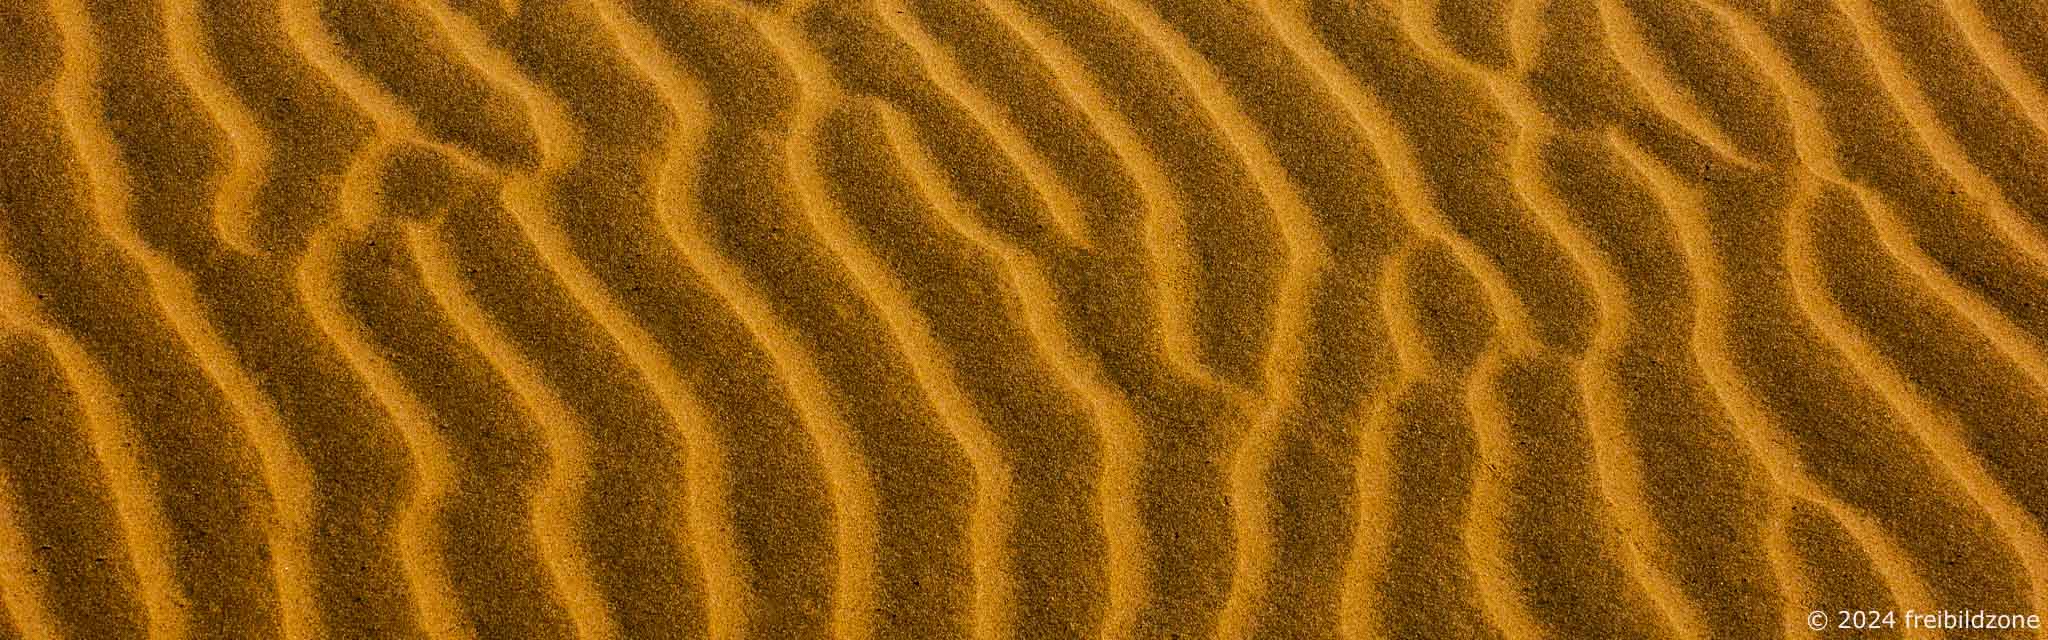 Wüstensand, Sahara, Marokko